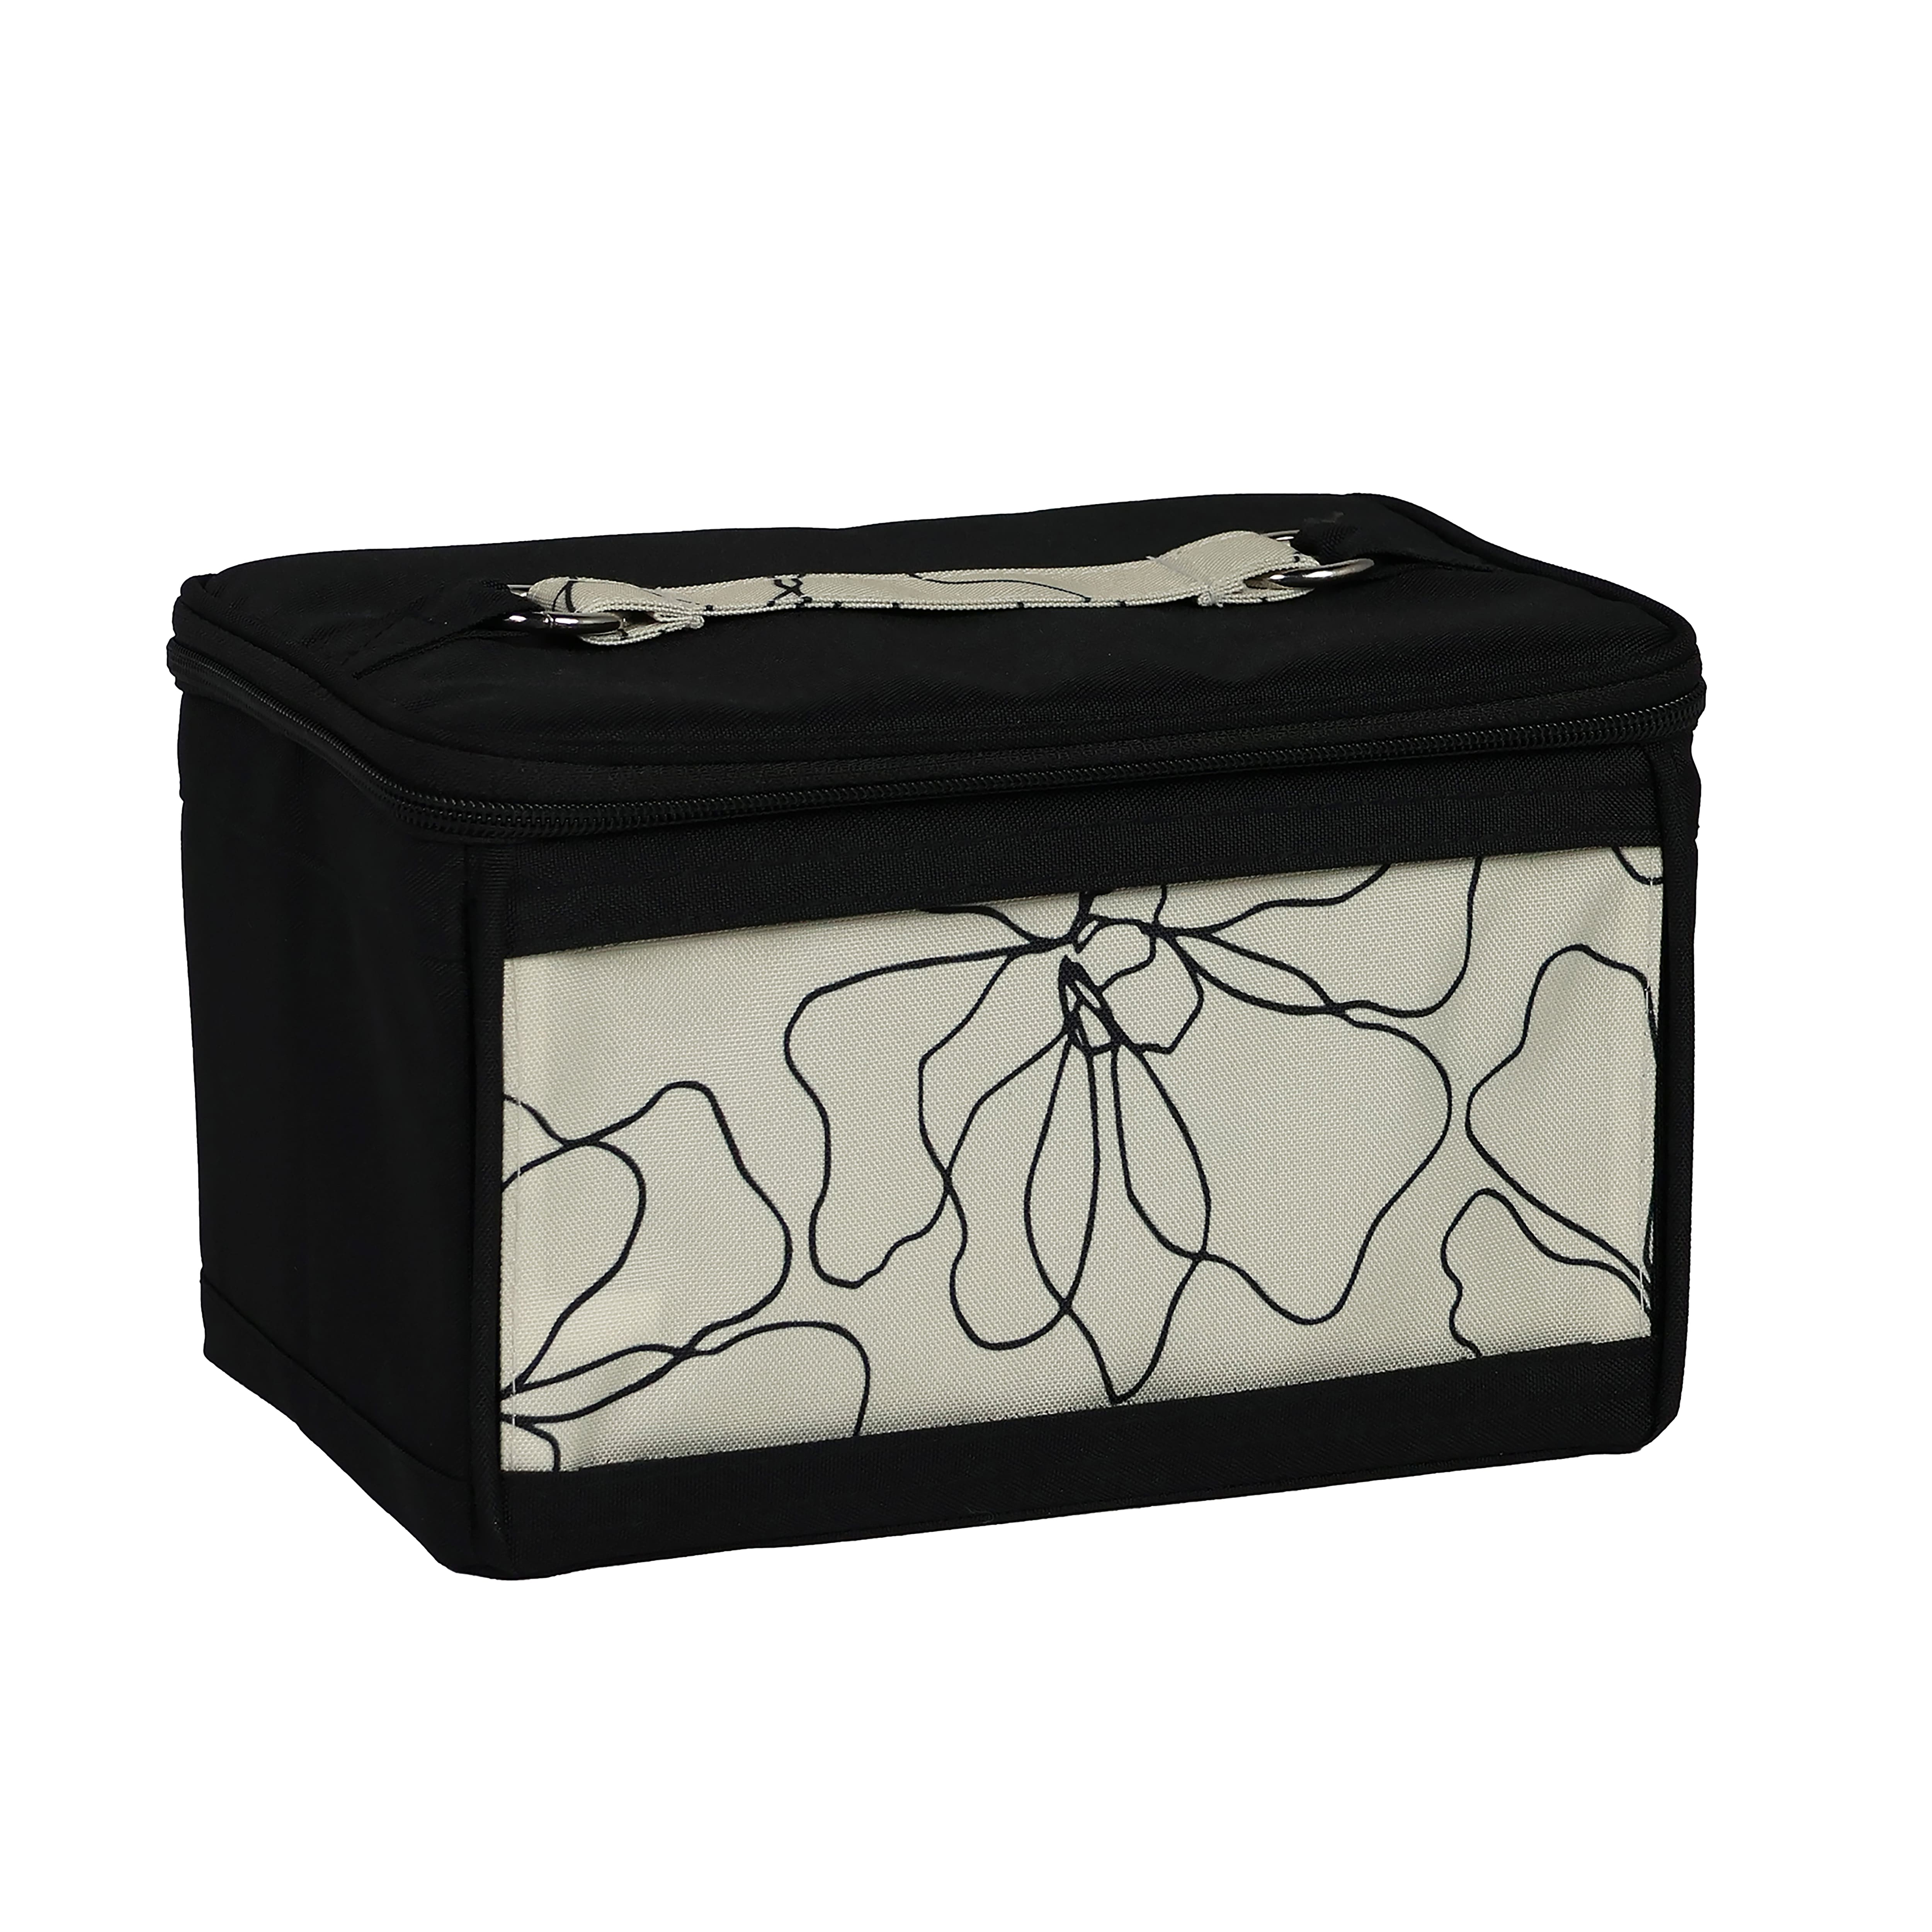 Everything Mary Sewing Kit Organizer Box, Black - Supplies Storage Bas